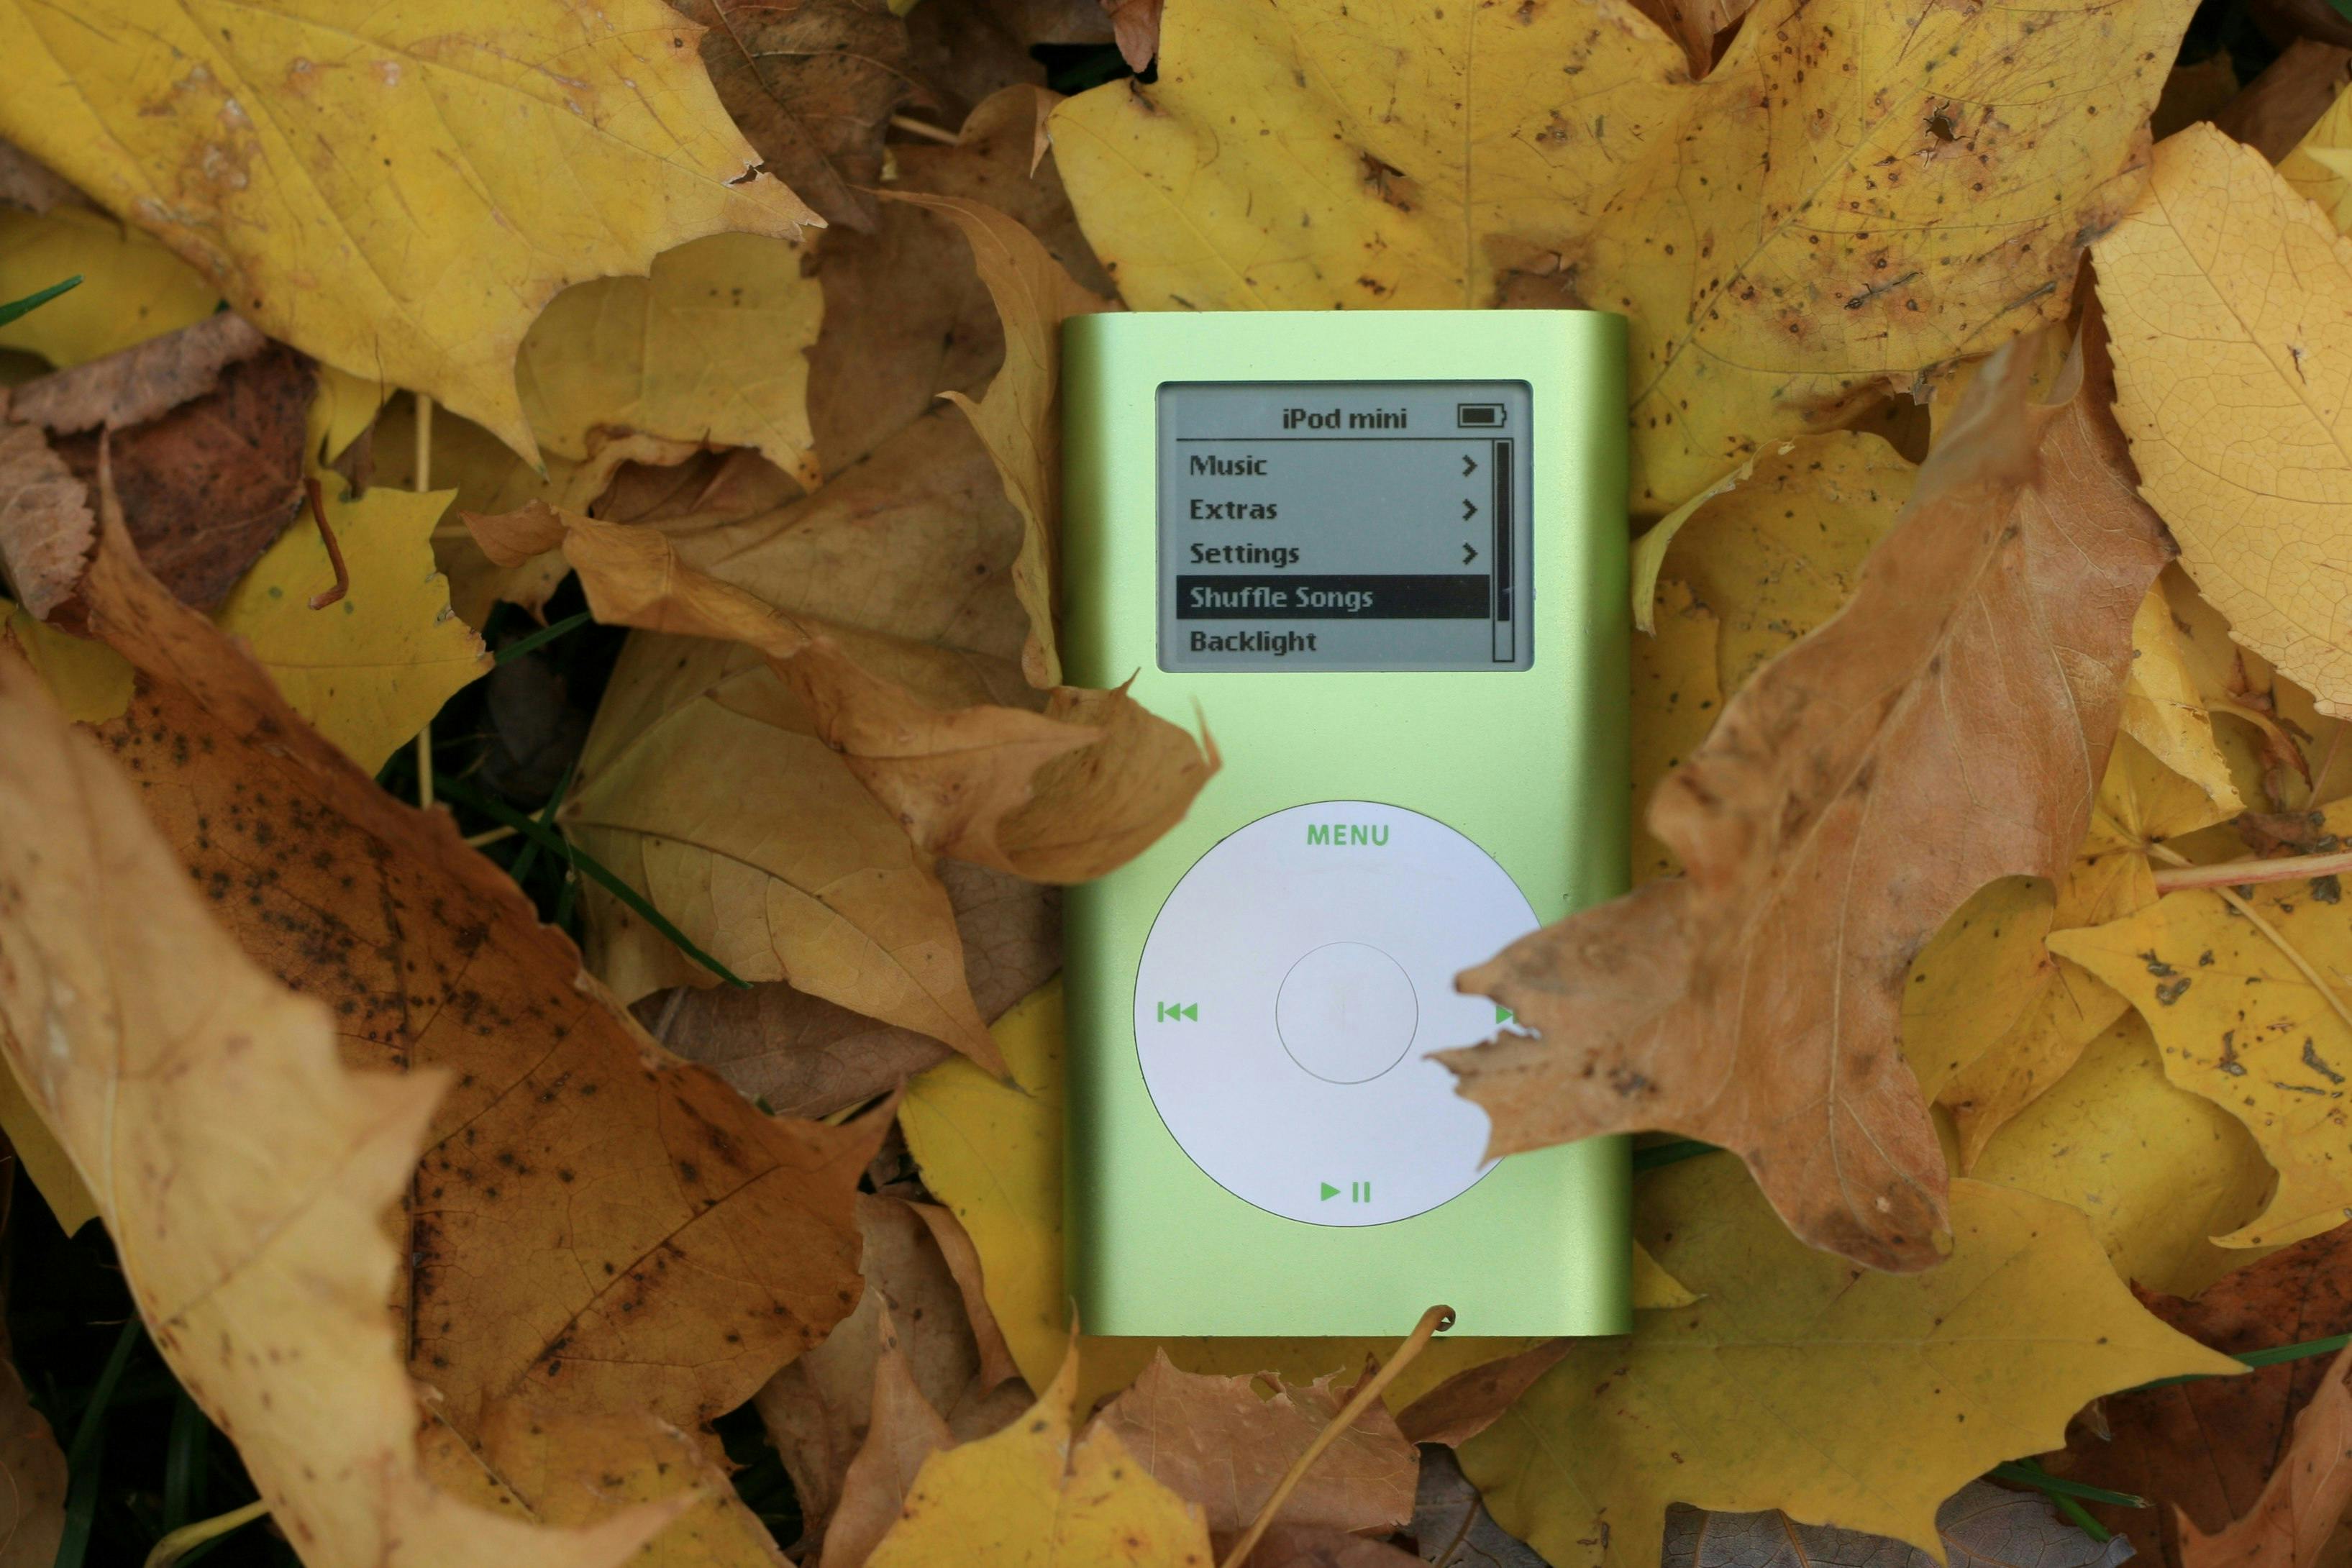 iPod Mini on leafs.